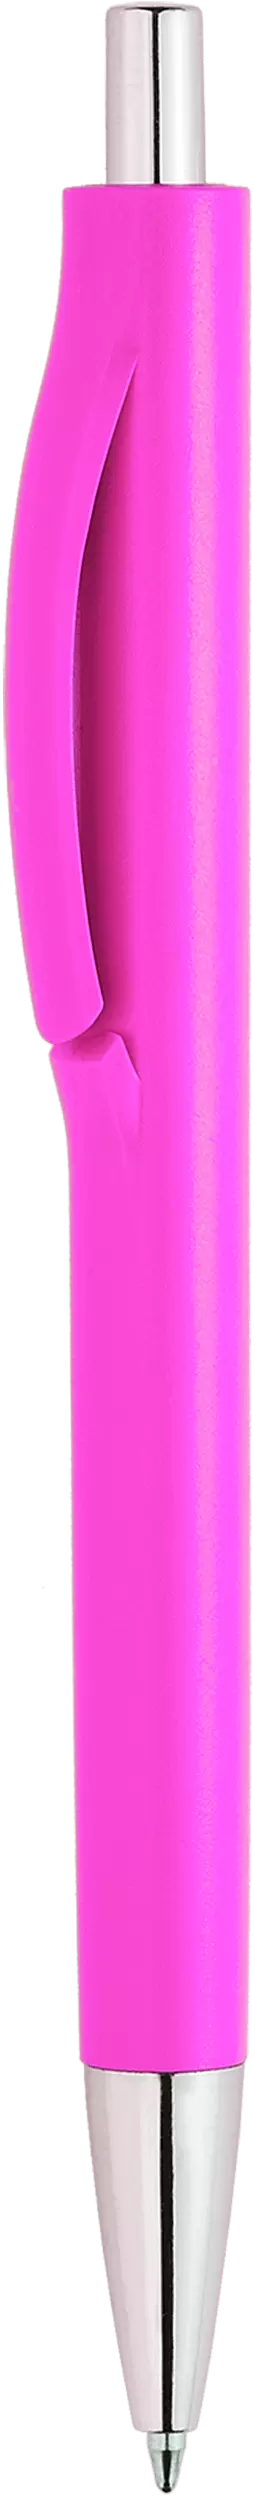 Ручка IGLA CHROME Розовая 1032-10